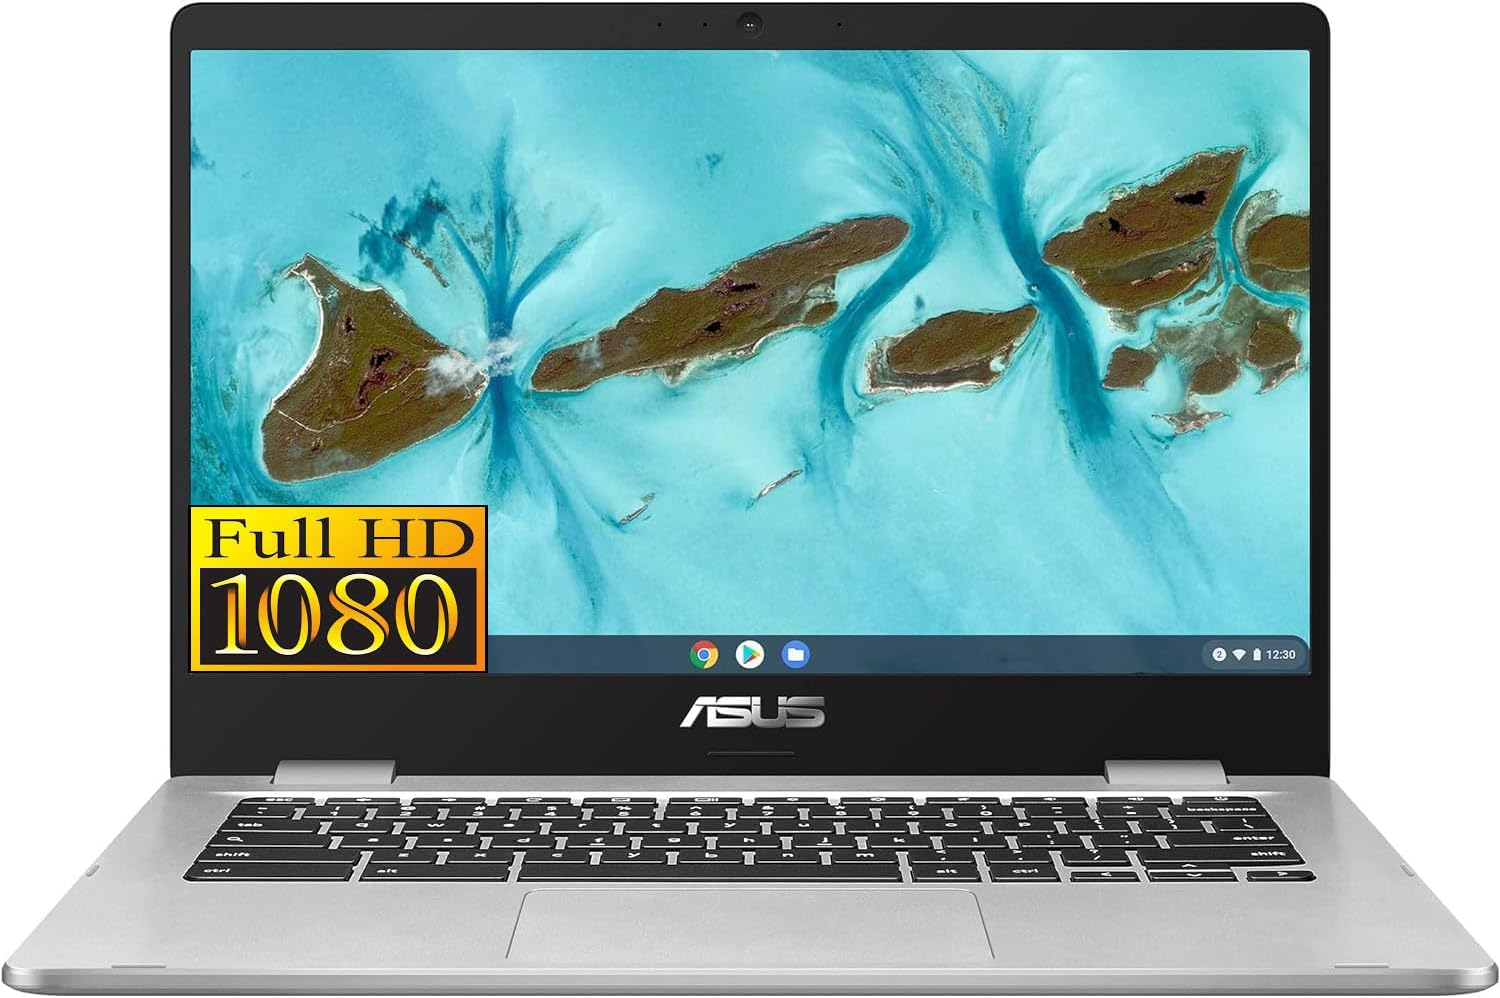 Asus 14 Slim Chrome OS Laptop Intel Processor up to 2.8GHz 14.1in Full HD NanoEdge-Display with 180 Degree-Hinge 4GB DDR4 64GB Storage WiFi + BT (C424 – Renewed)